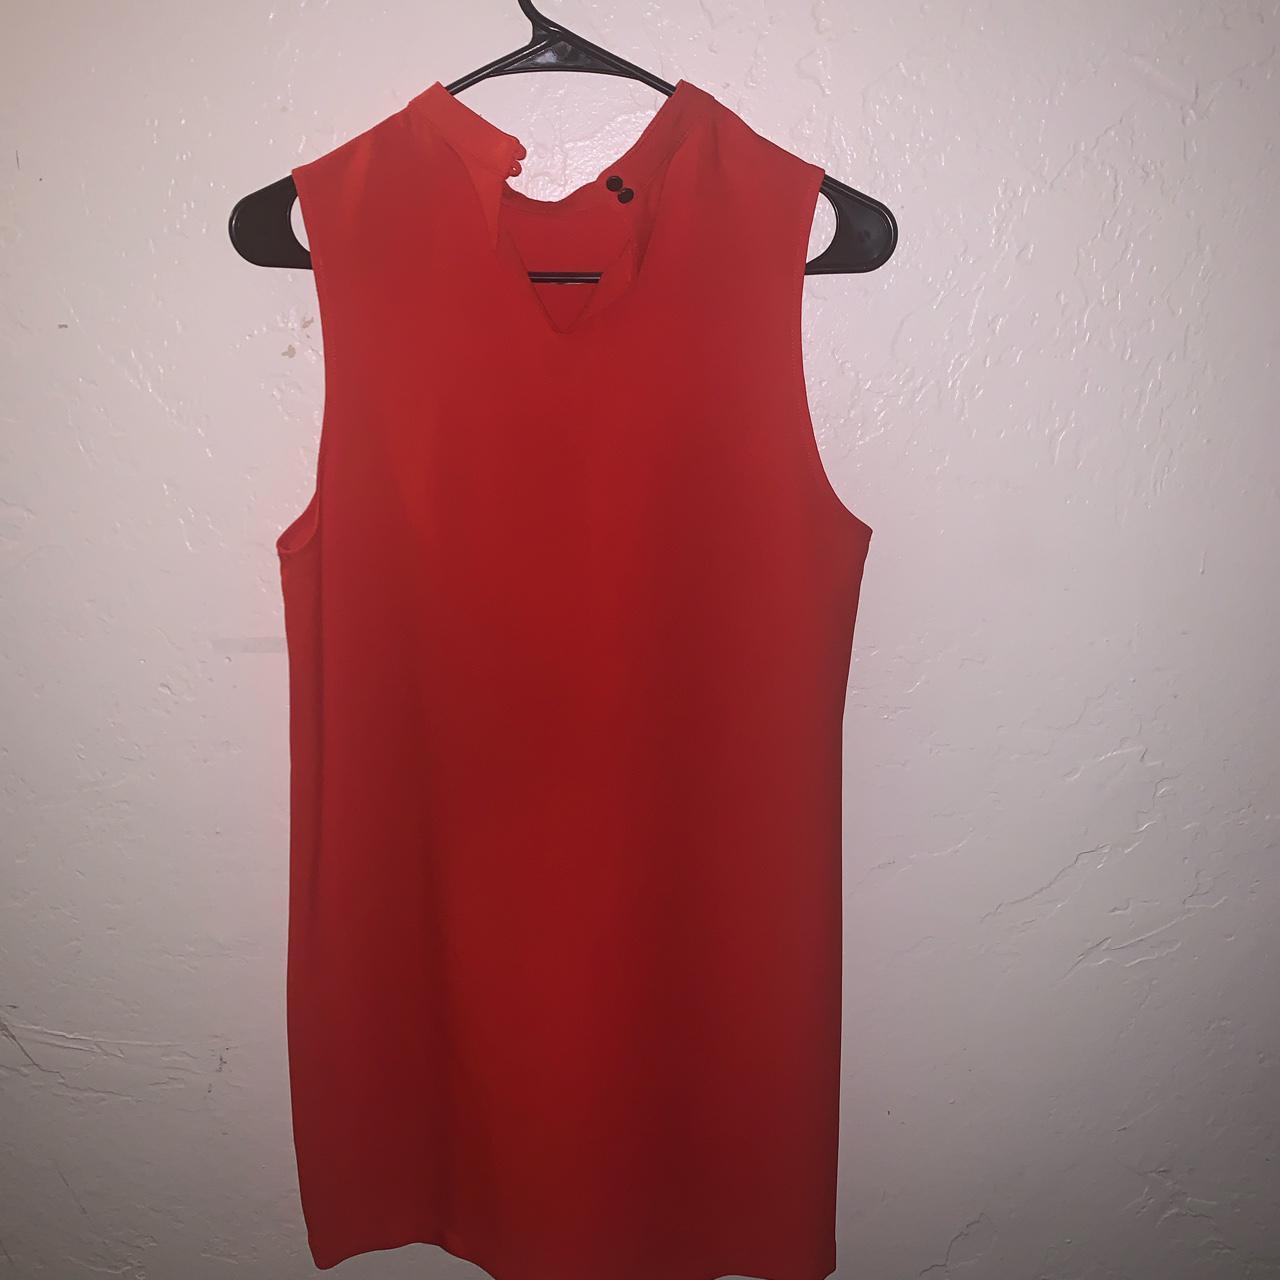 Product Image 3 - 2 Red dress

Bundle dress deal
Taylor